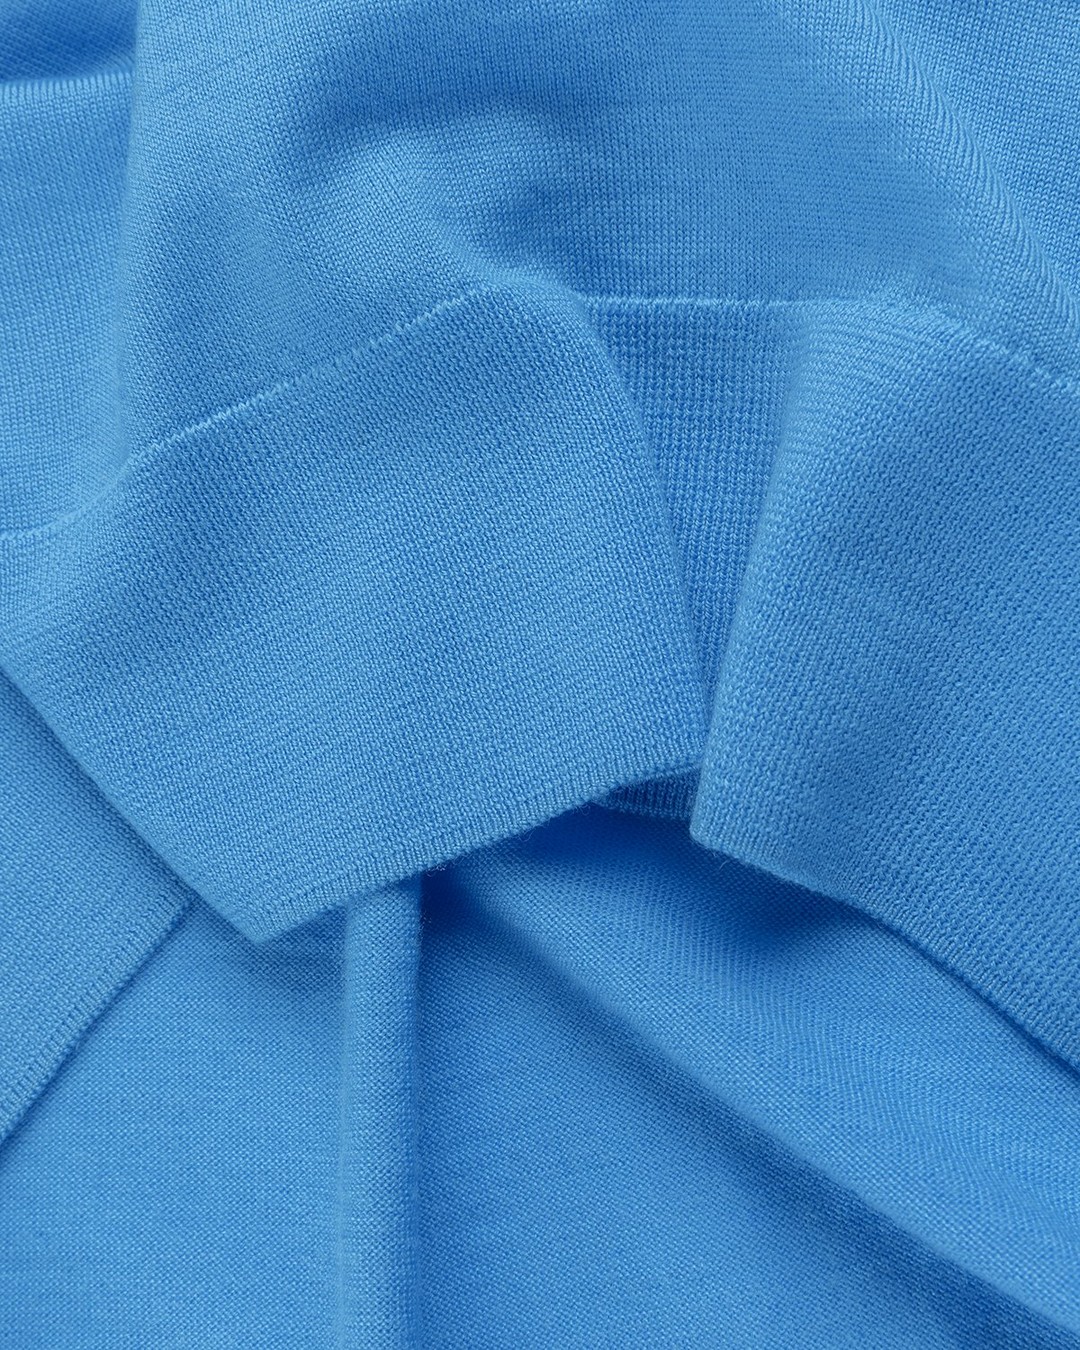 Dries van Noten – Merino Sleeveless Sweater Madonna - Knitwear - Blue - Image 5